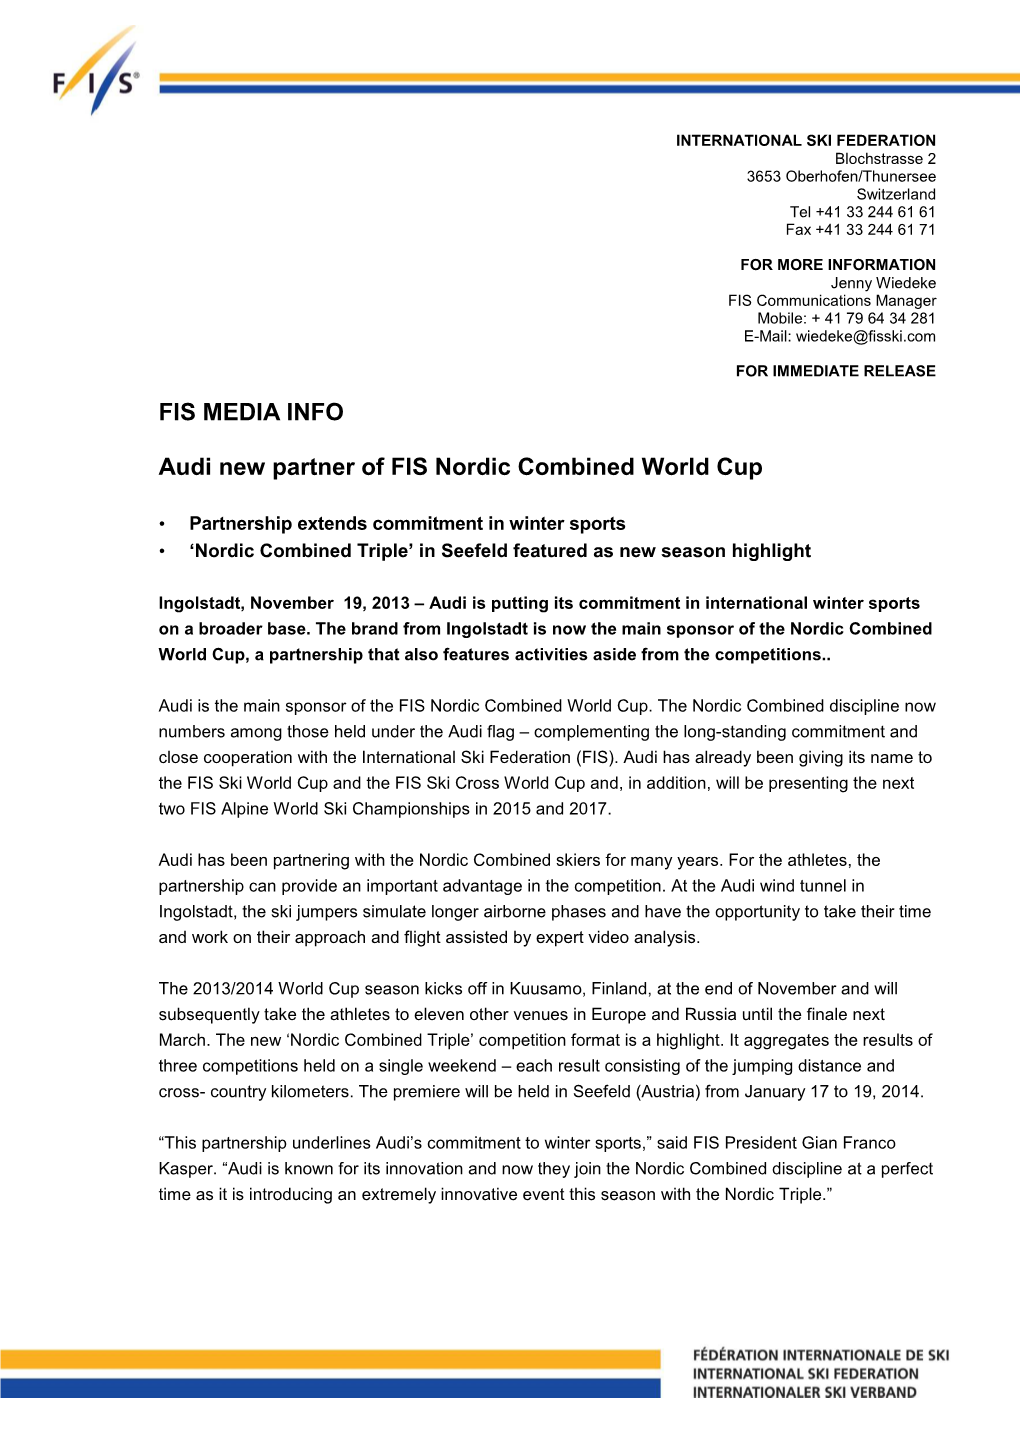 Audi Nordic Combined Press Release